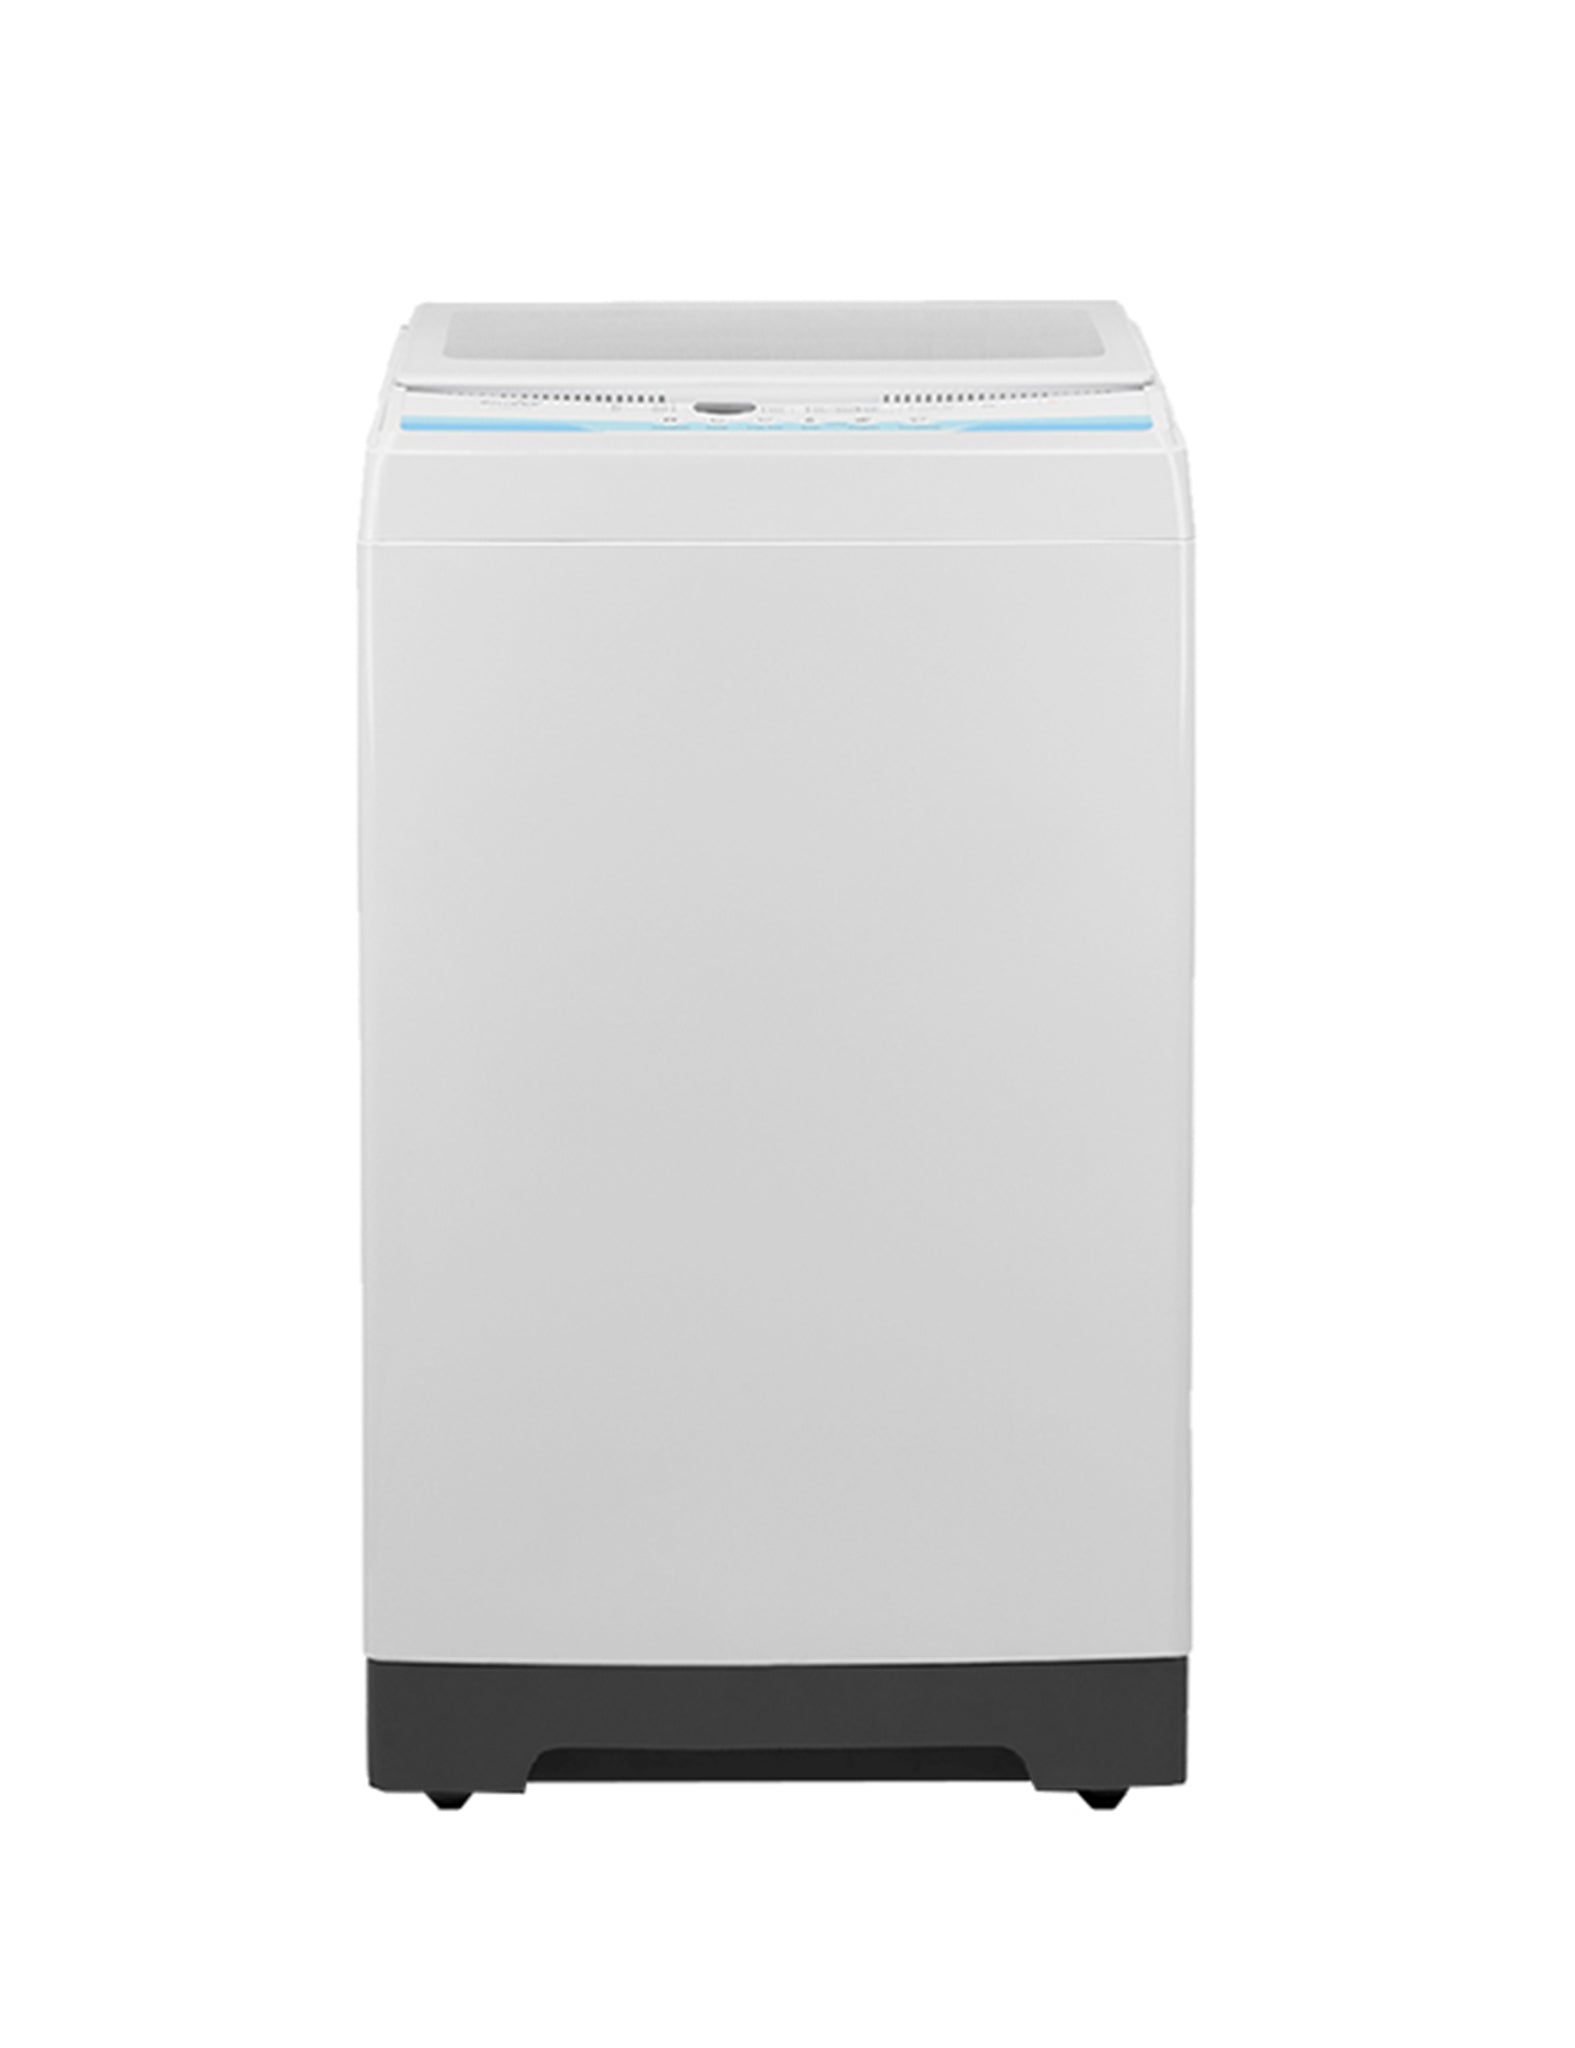 COMFEE' Washing Machine 2.4 Cu.ft LED Portable Washin Environmentally  Friendly, Child Lock for RV, Dorm